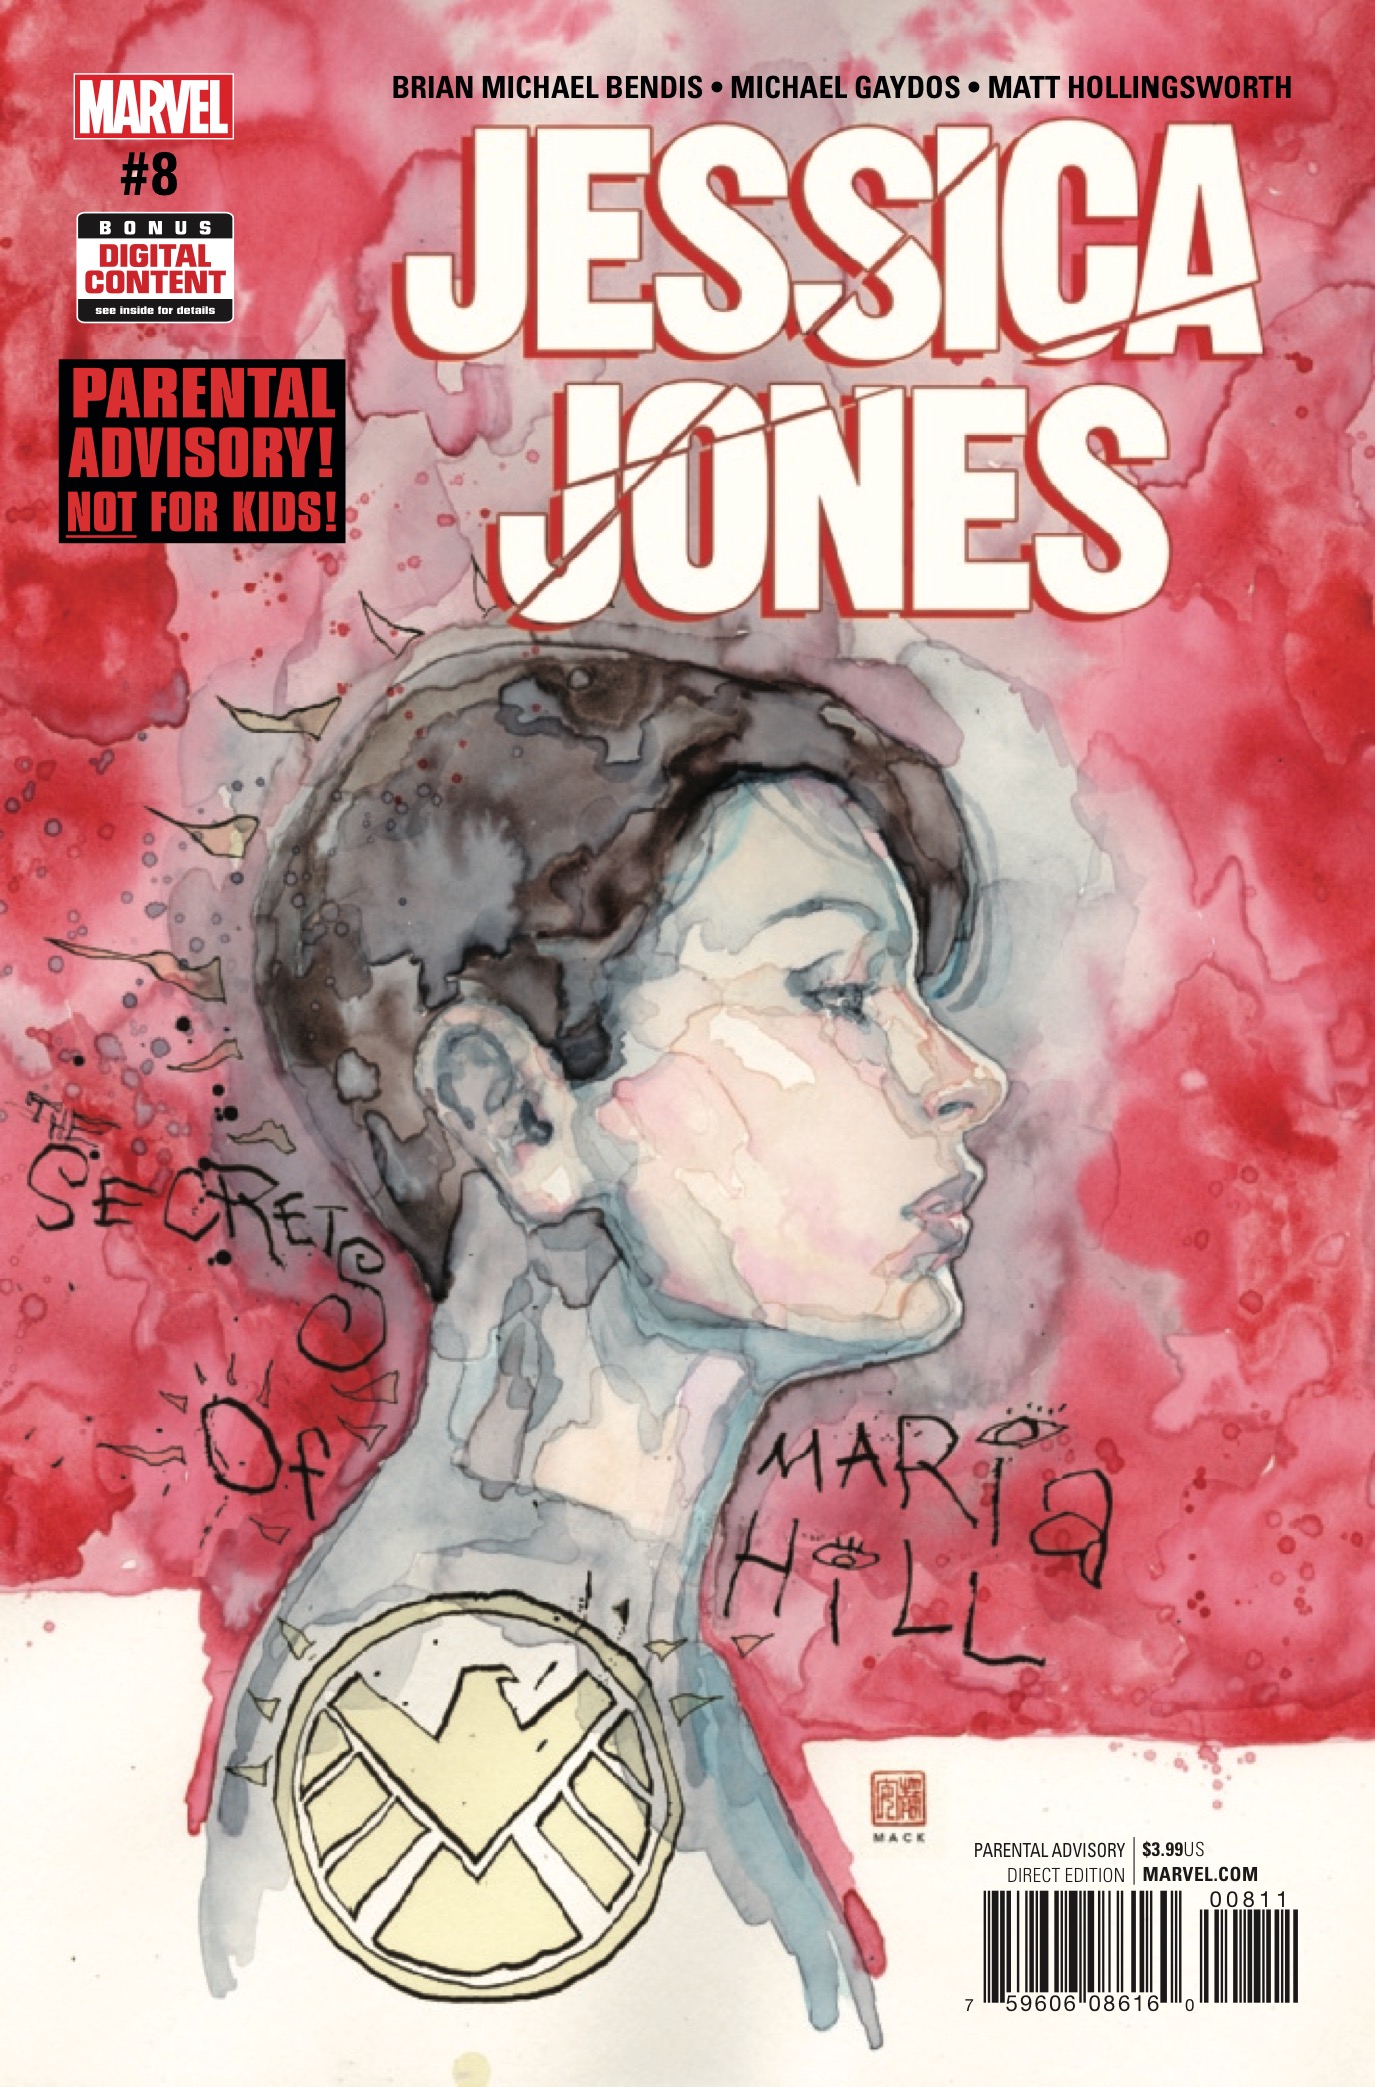 Marvel Preview: Jessica Jones #8